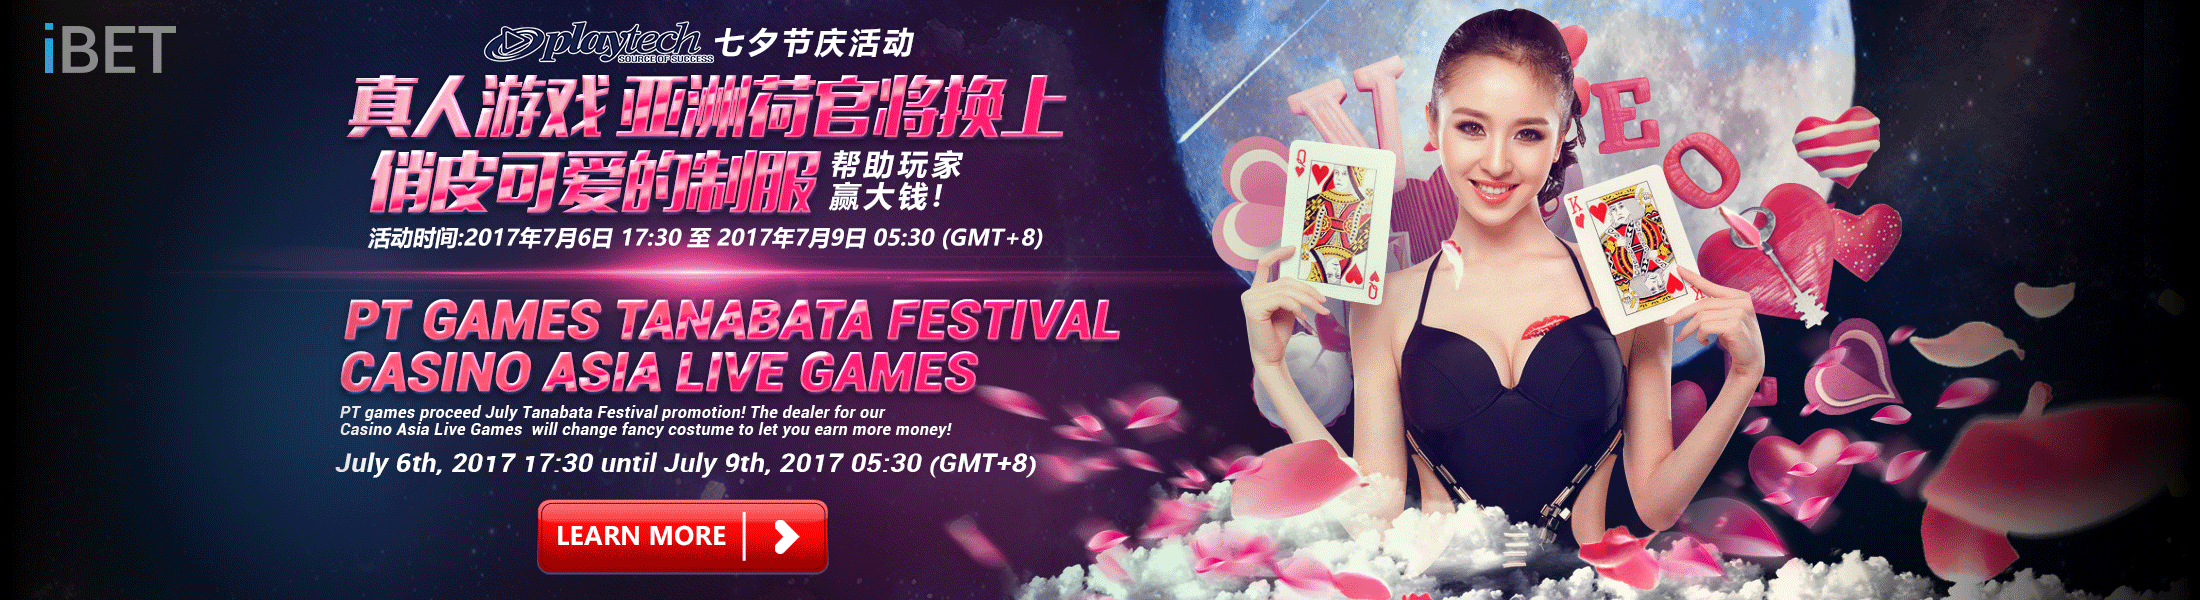 iBET PT Live Casino Tanabata Festival Promotion